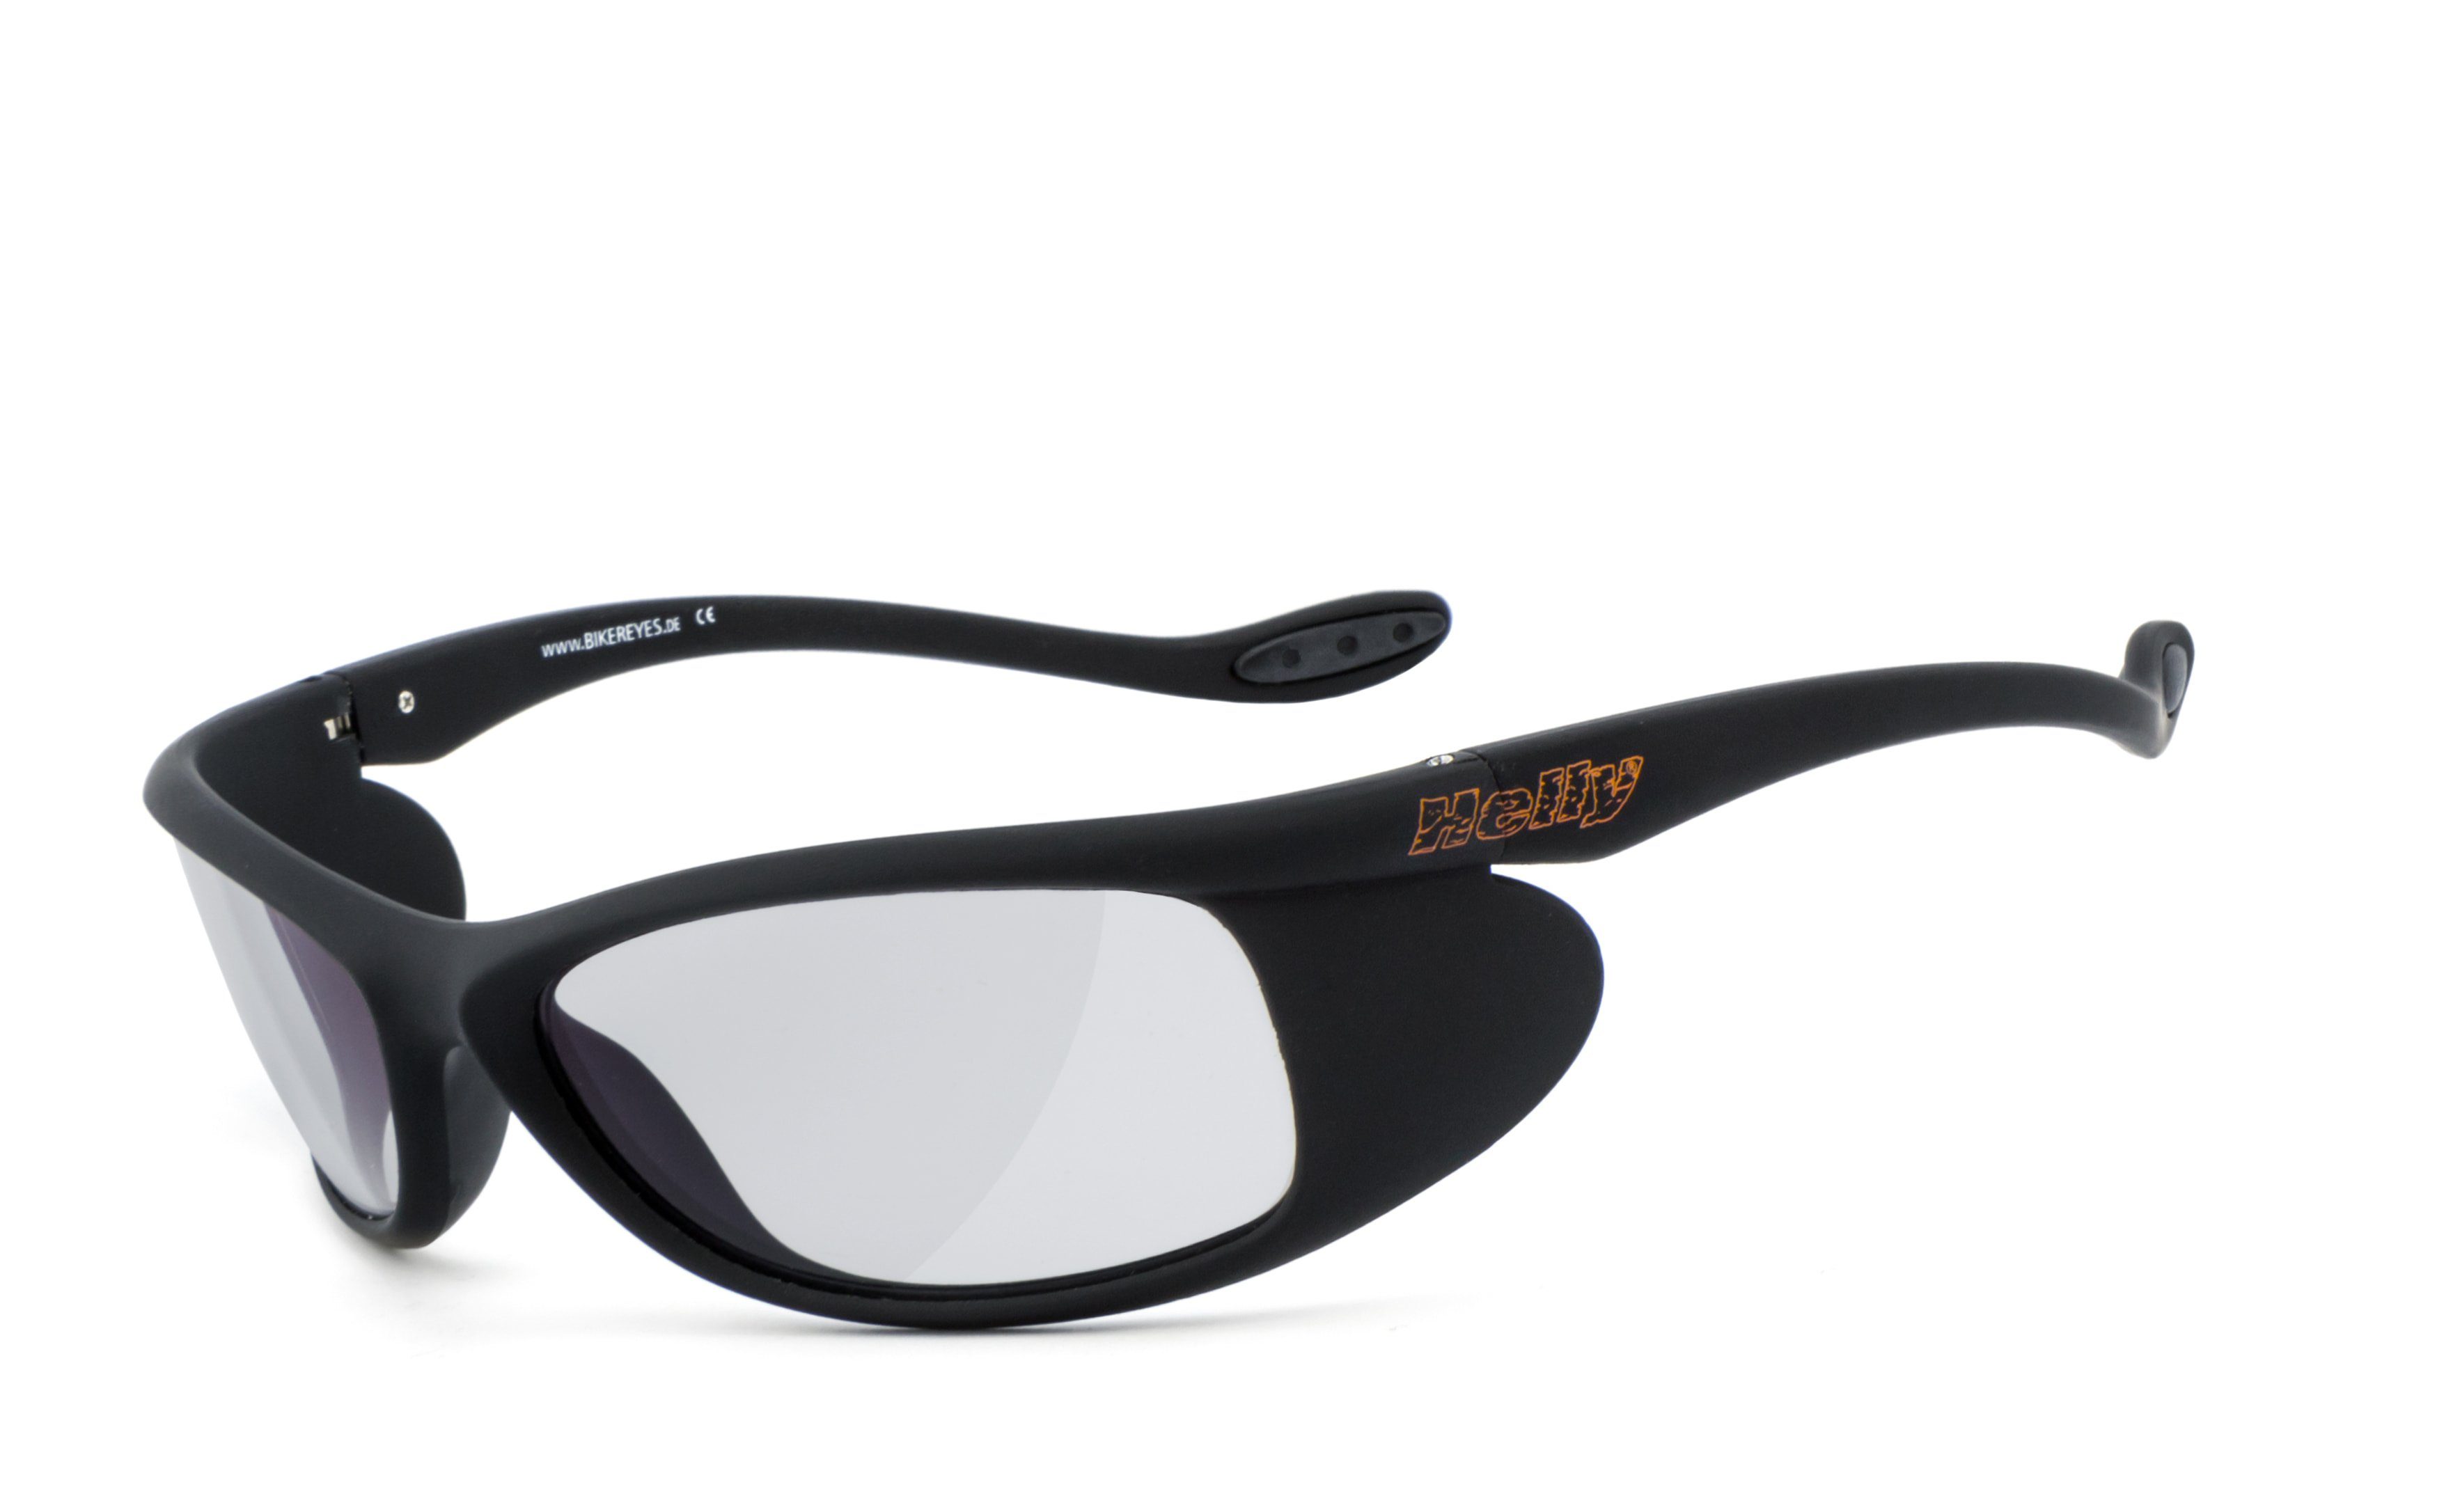 schnell Bikereyes Gläser - Motorradbrille selbsttönende 4, Helly No.1 speed top